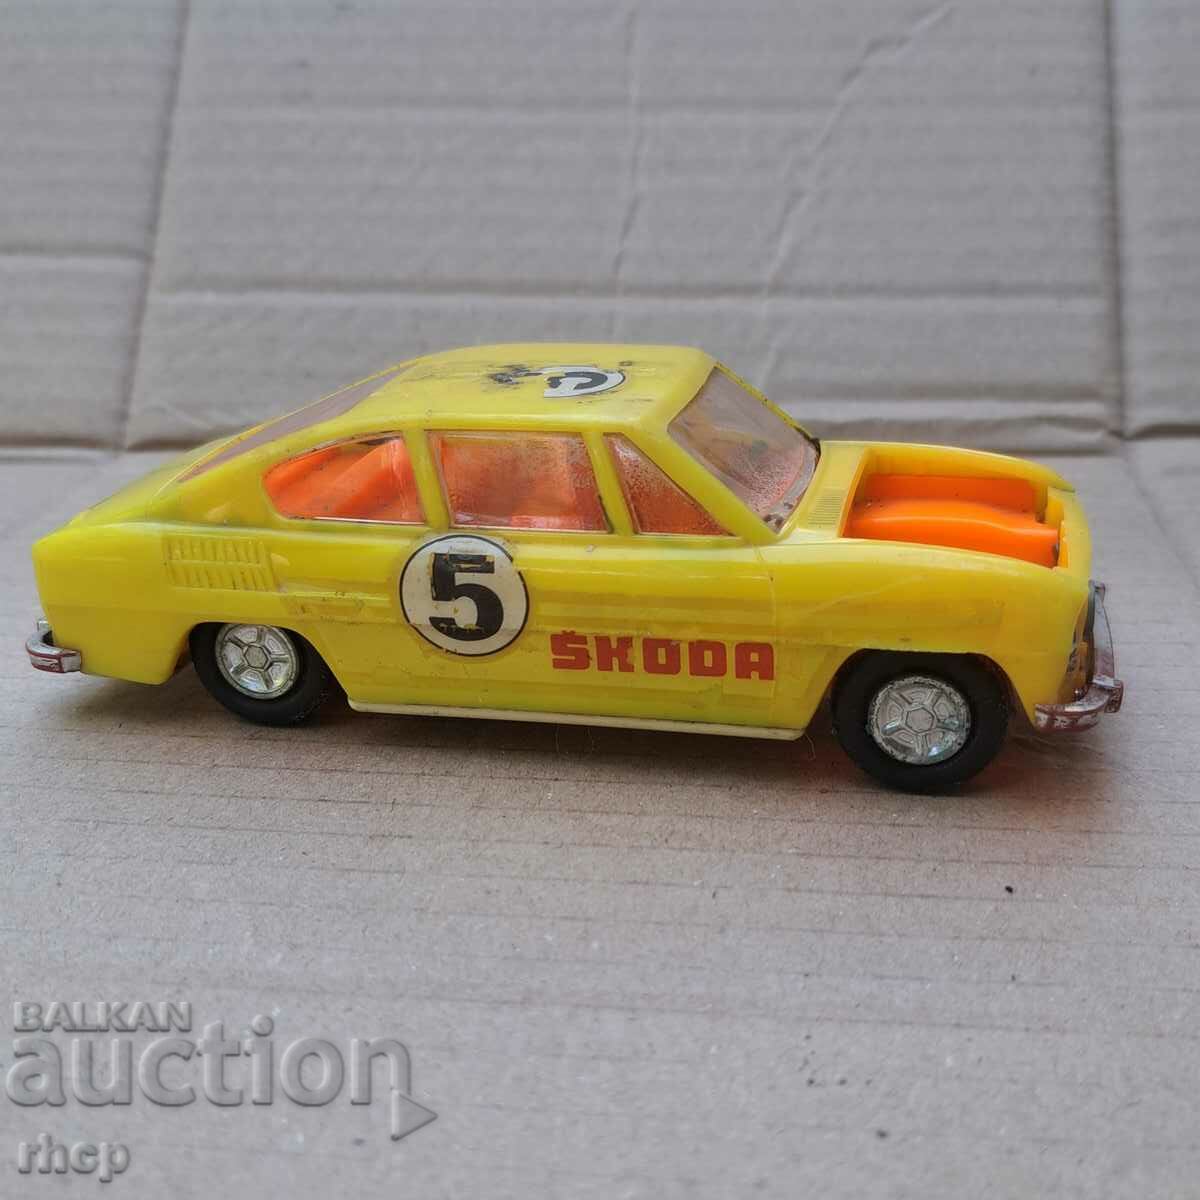 Skoda Rapid old model toy car